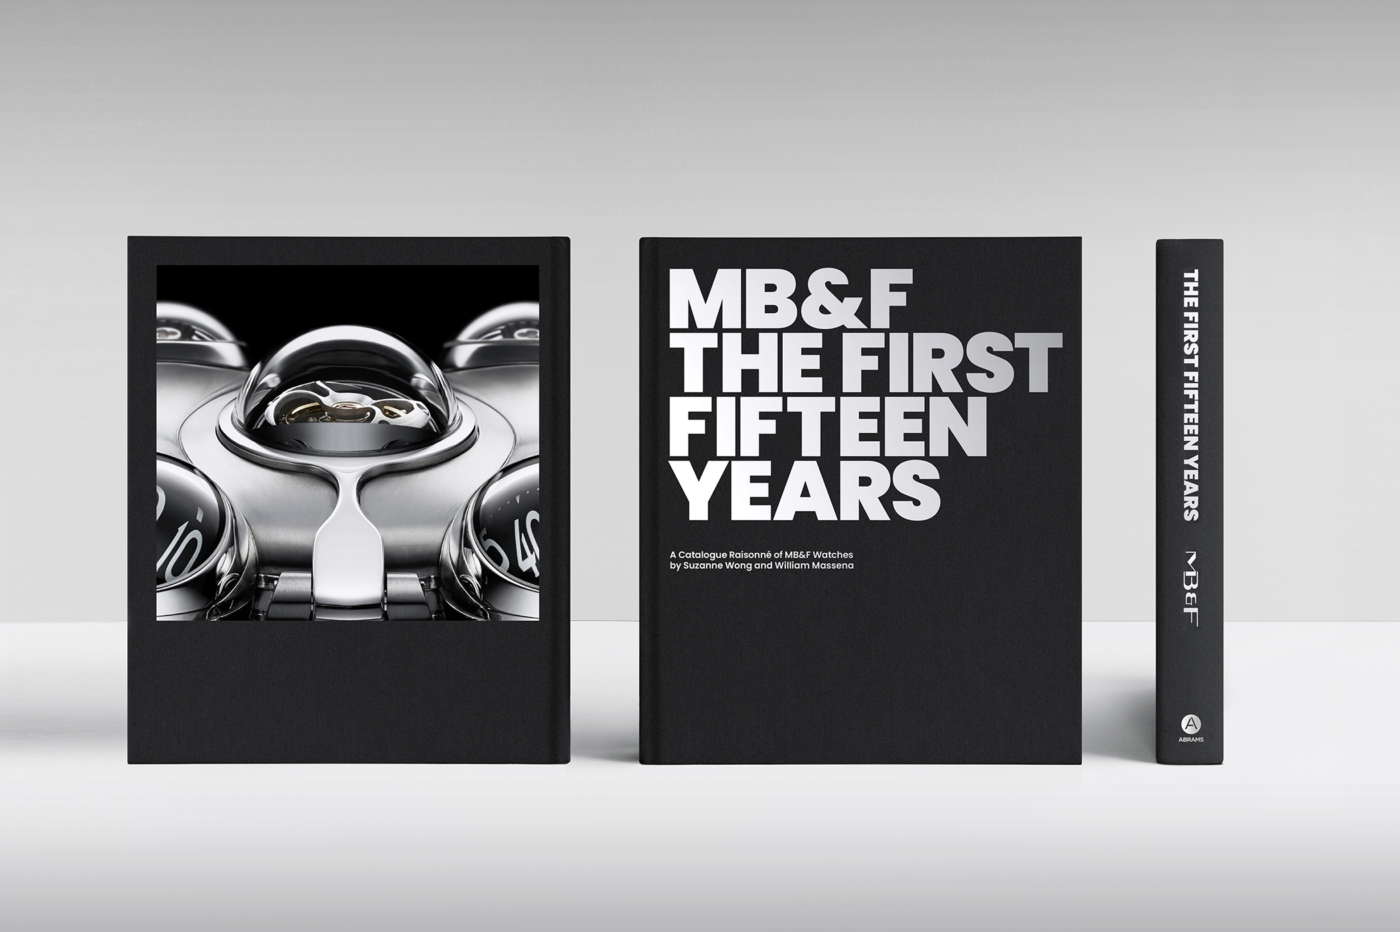 Biblioteka MB&F „The First Fiteen Years” – Catalogue Raisonné awangardowej manufaktury